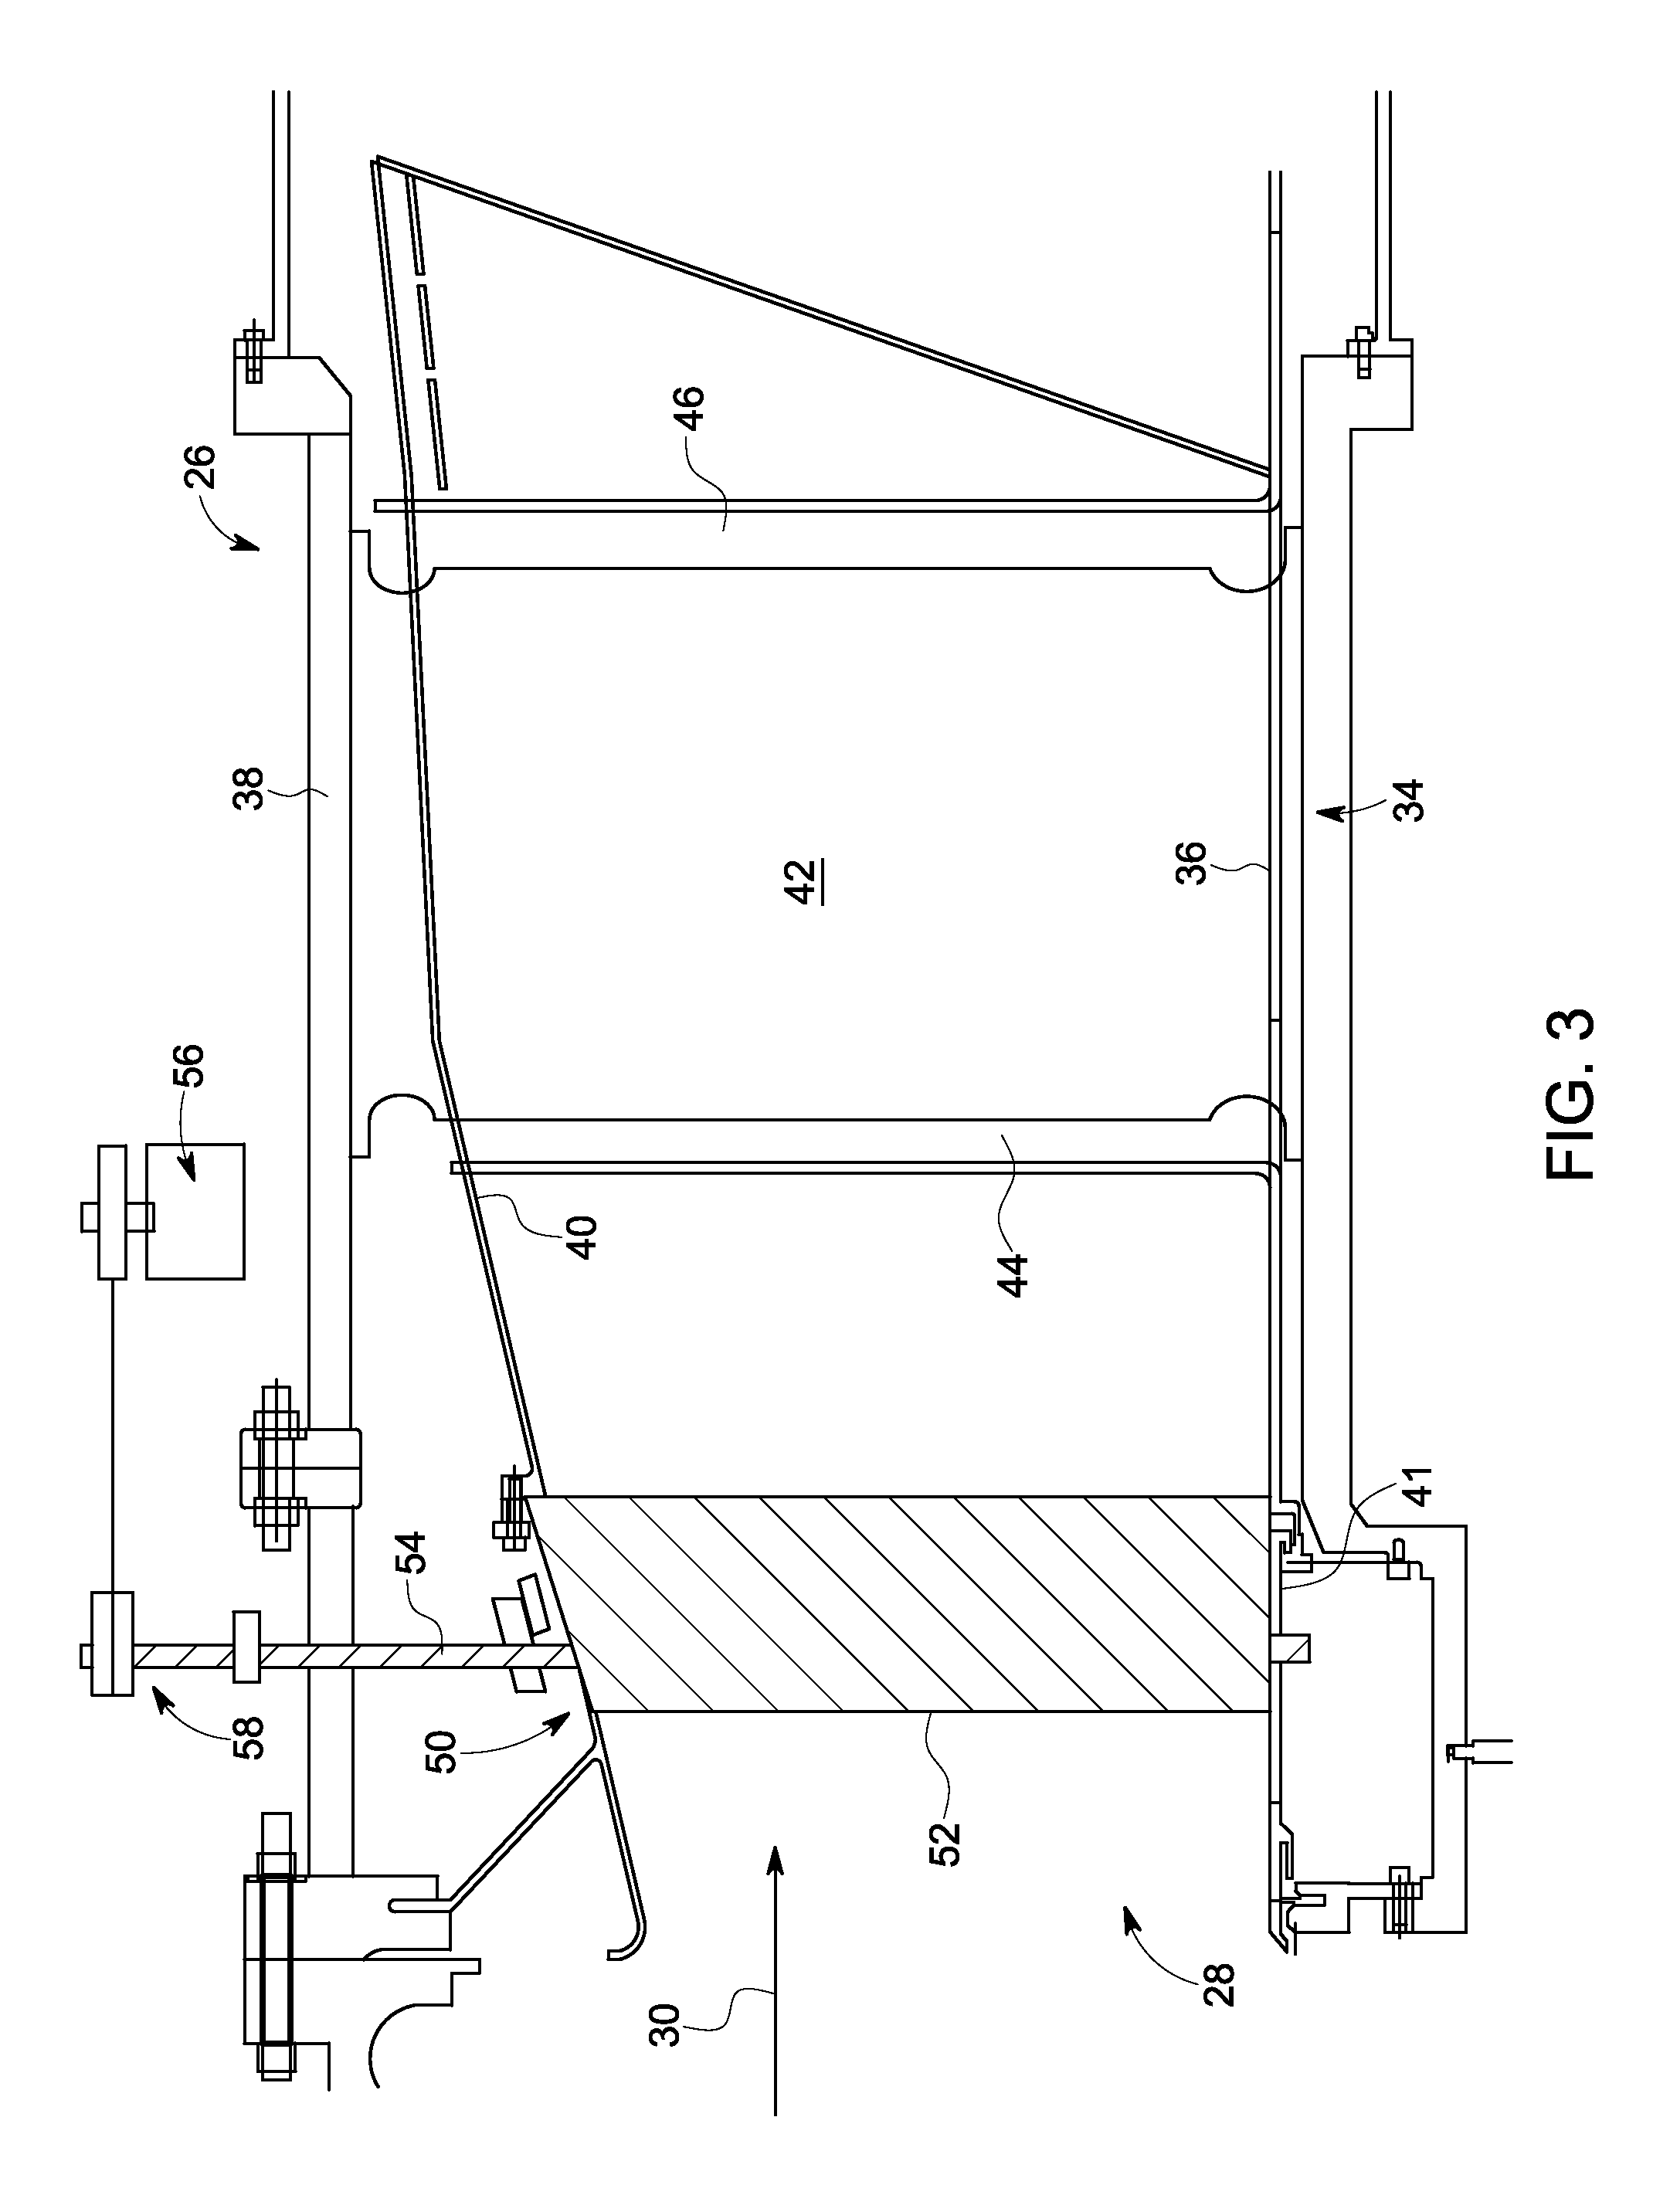 Flow manipulating arrangement for a turbine exhaust diffuser